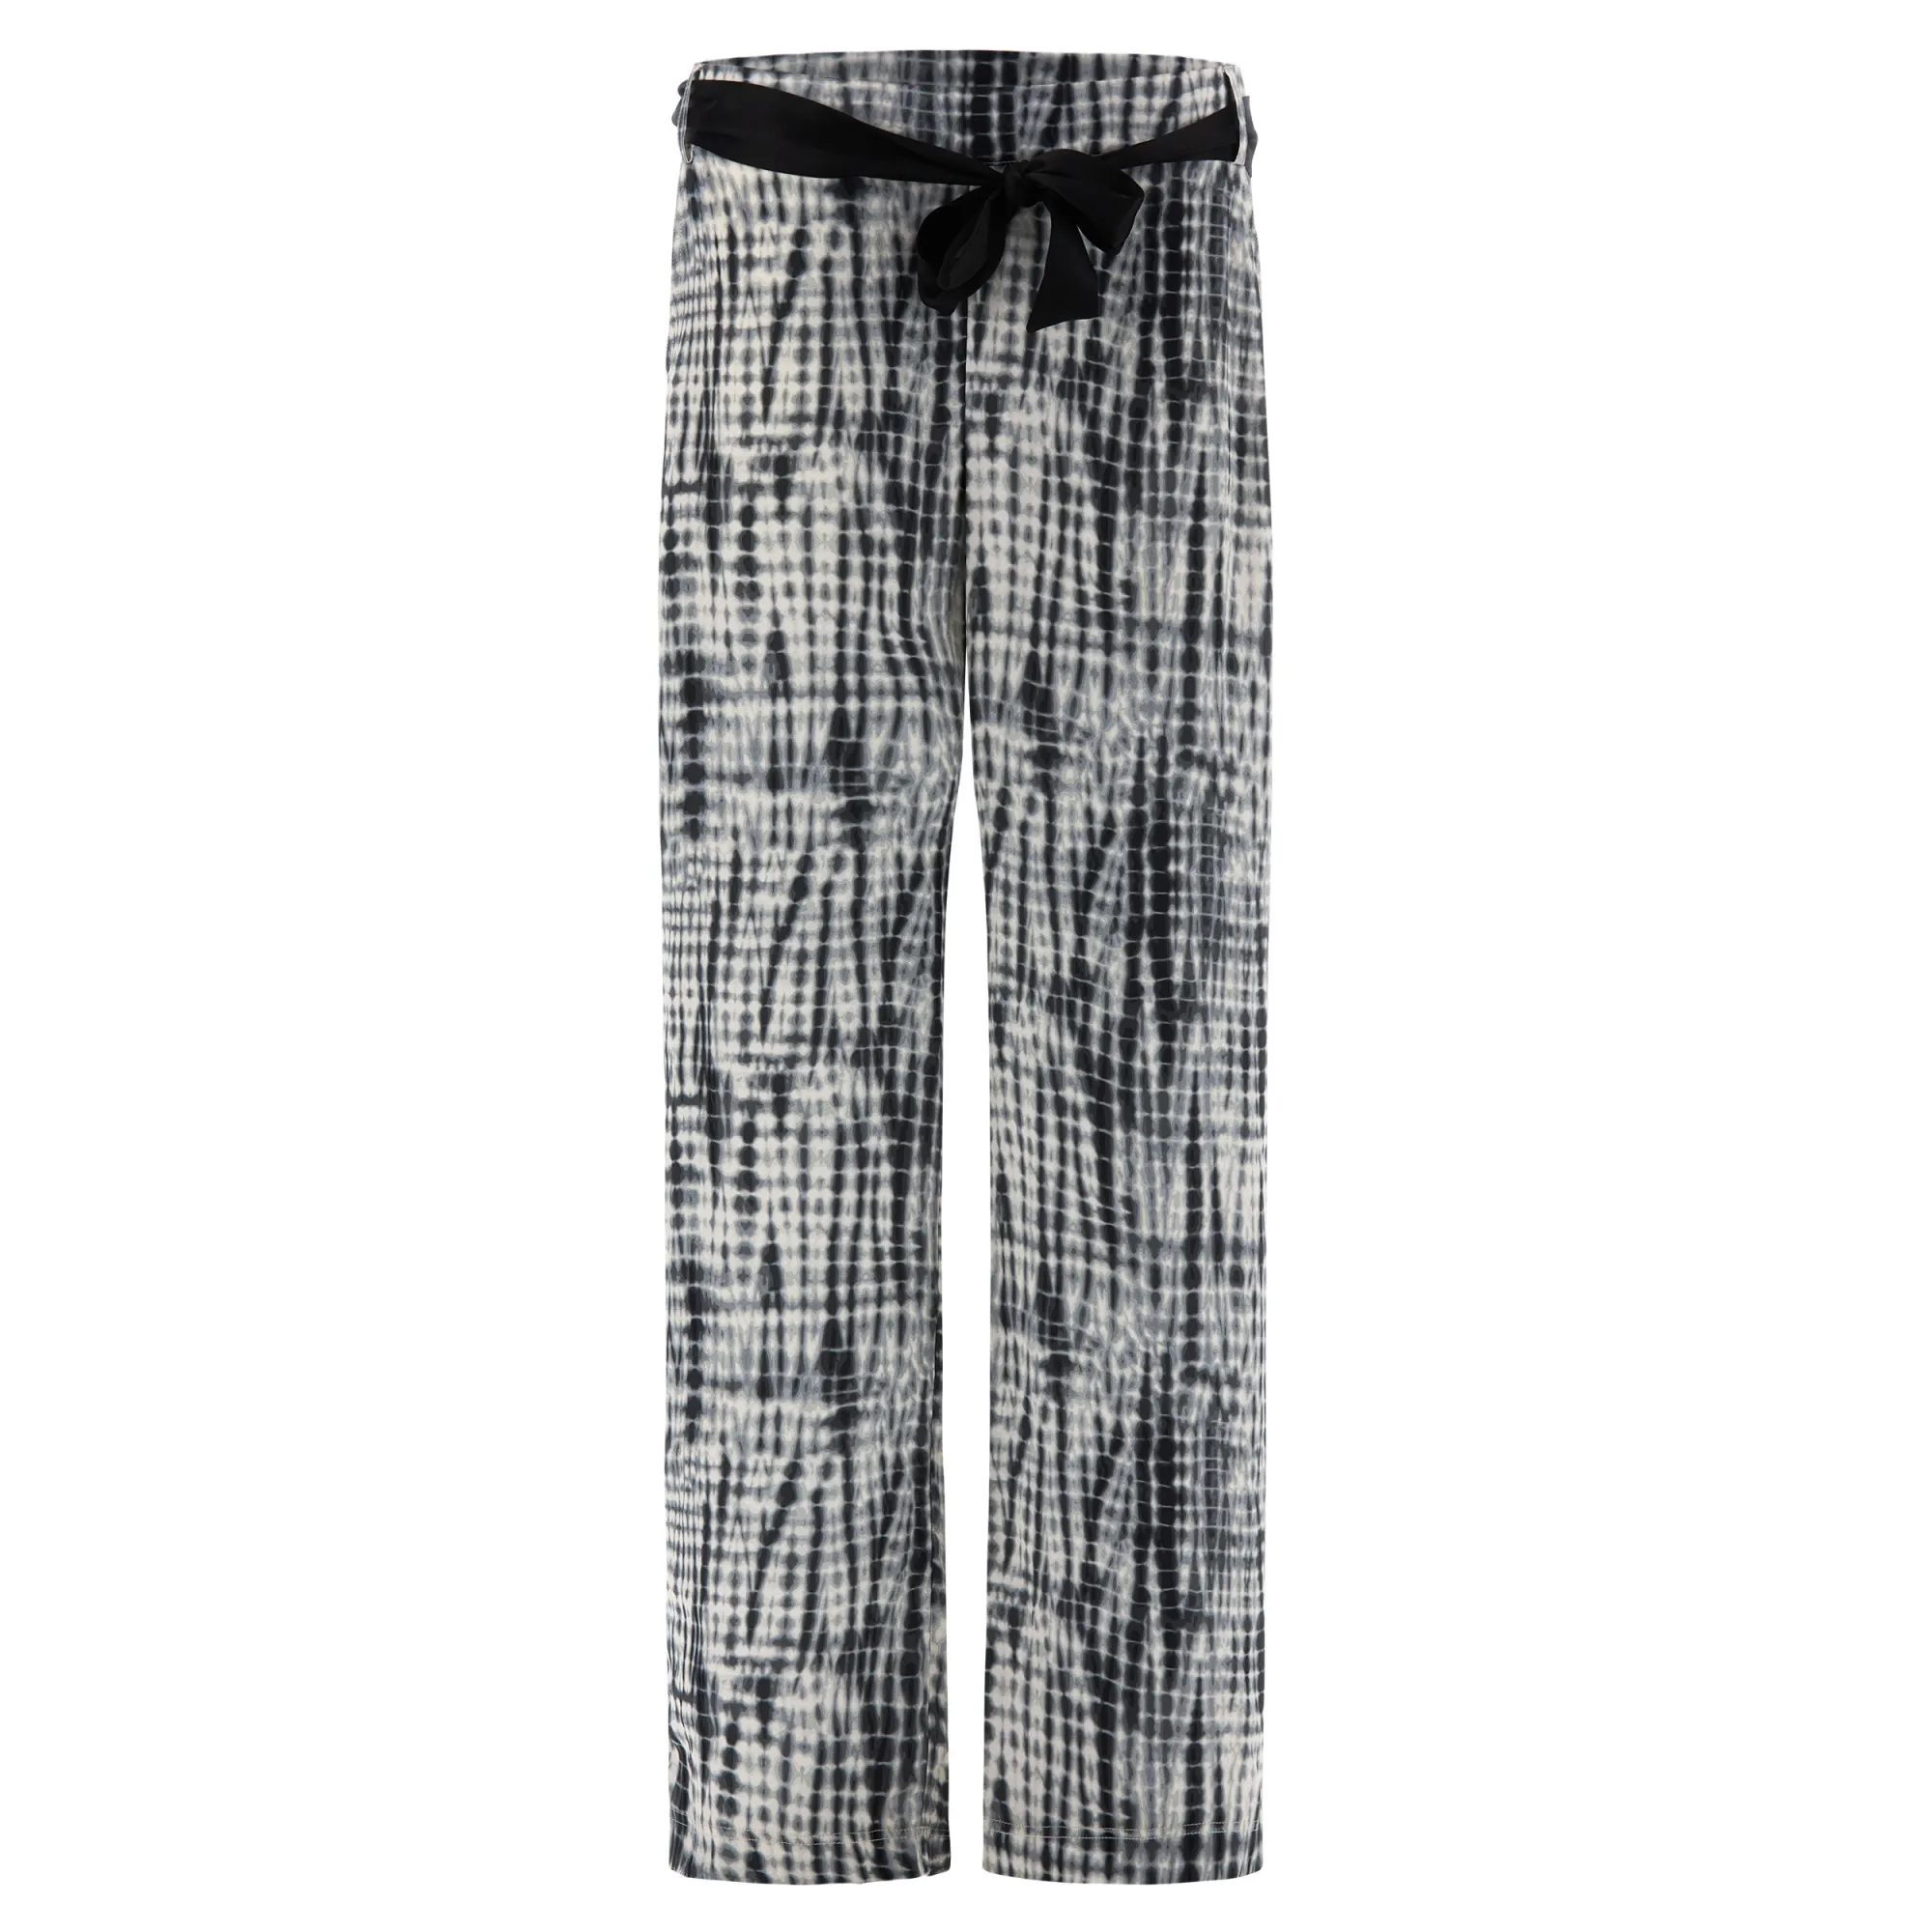 Freddy Damen Comfort Fit Pants - Wide Leg - Mit Gürtelband - Tie Dyed Schwarz - Weiß - MC5